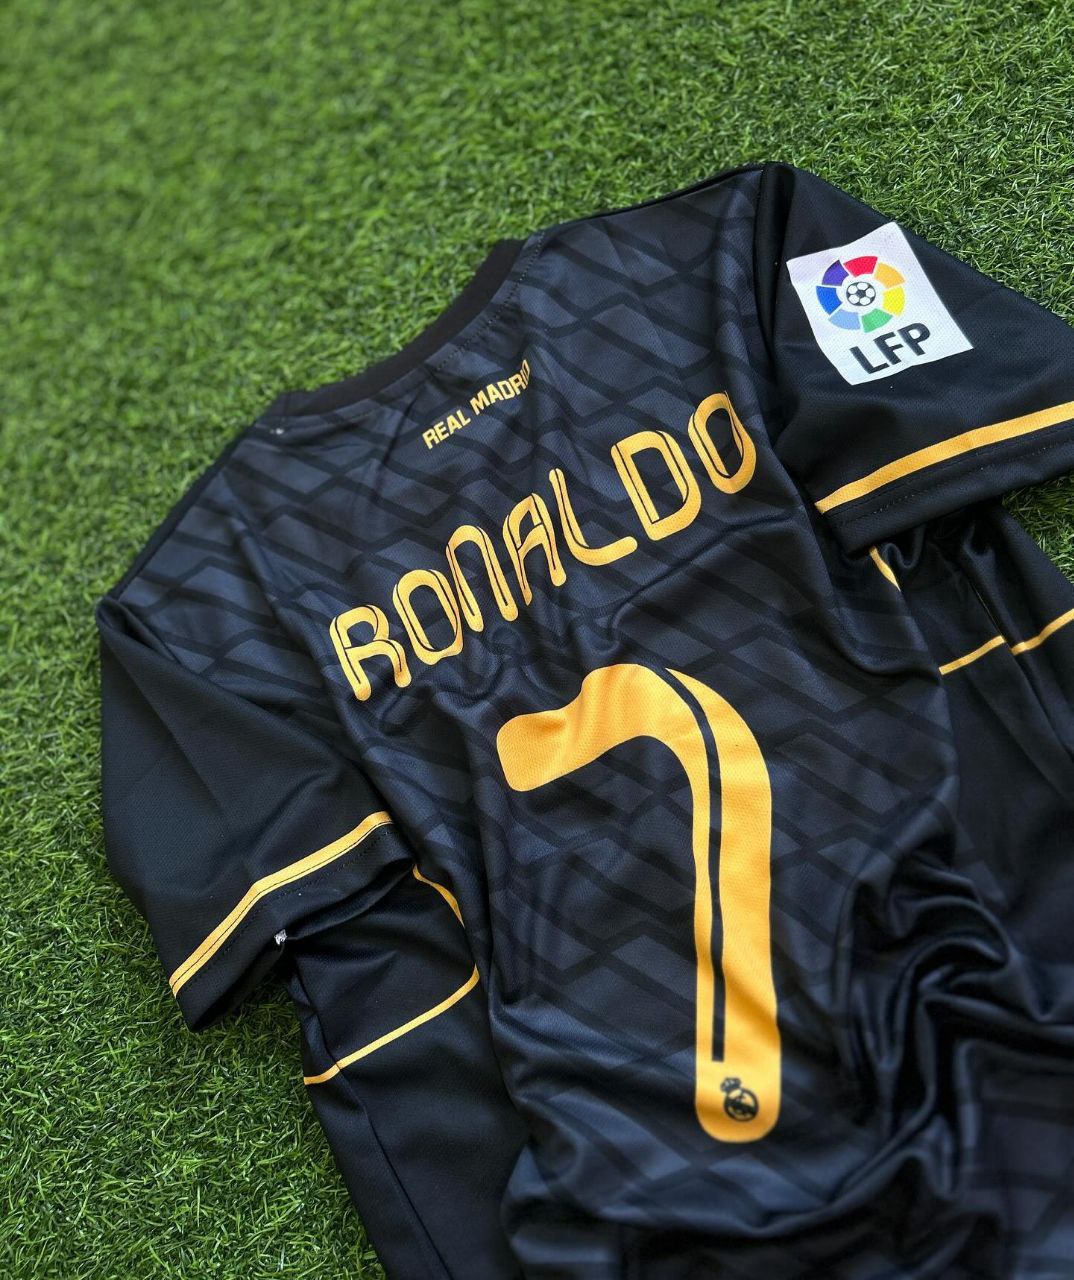 Cristiano Ronaldo Real Madrid Black Retro Jersey